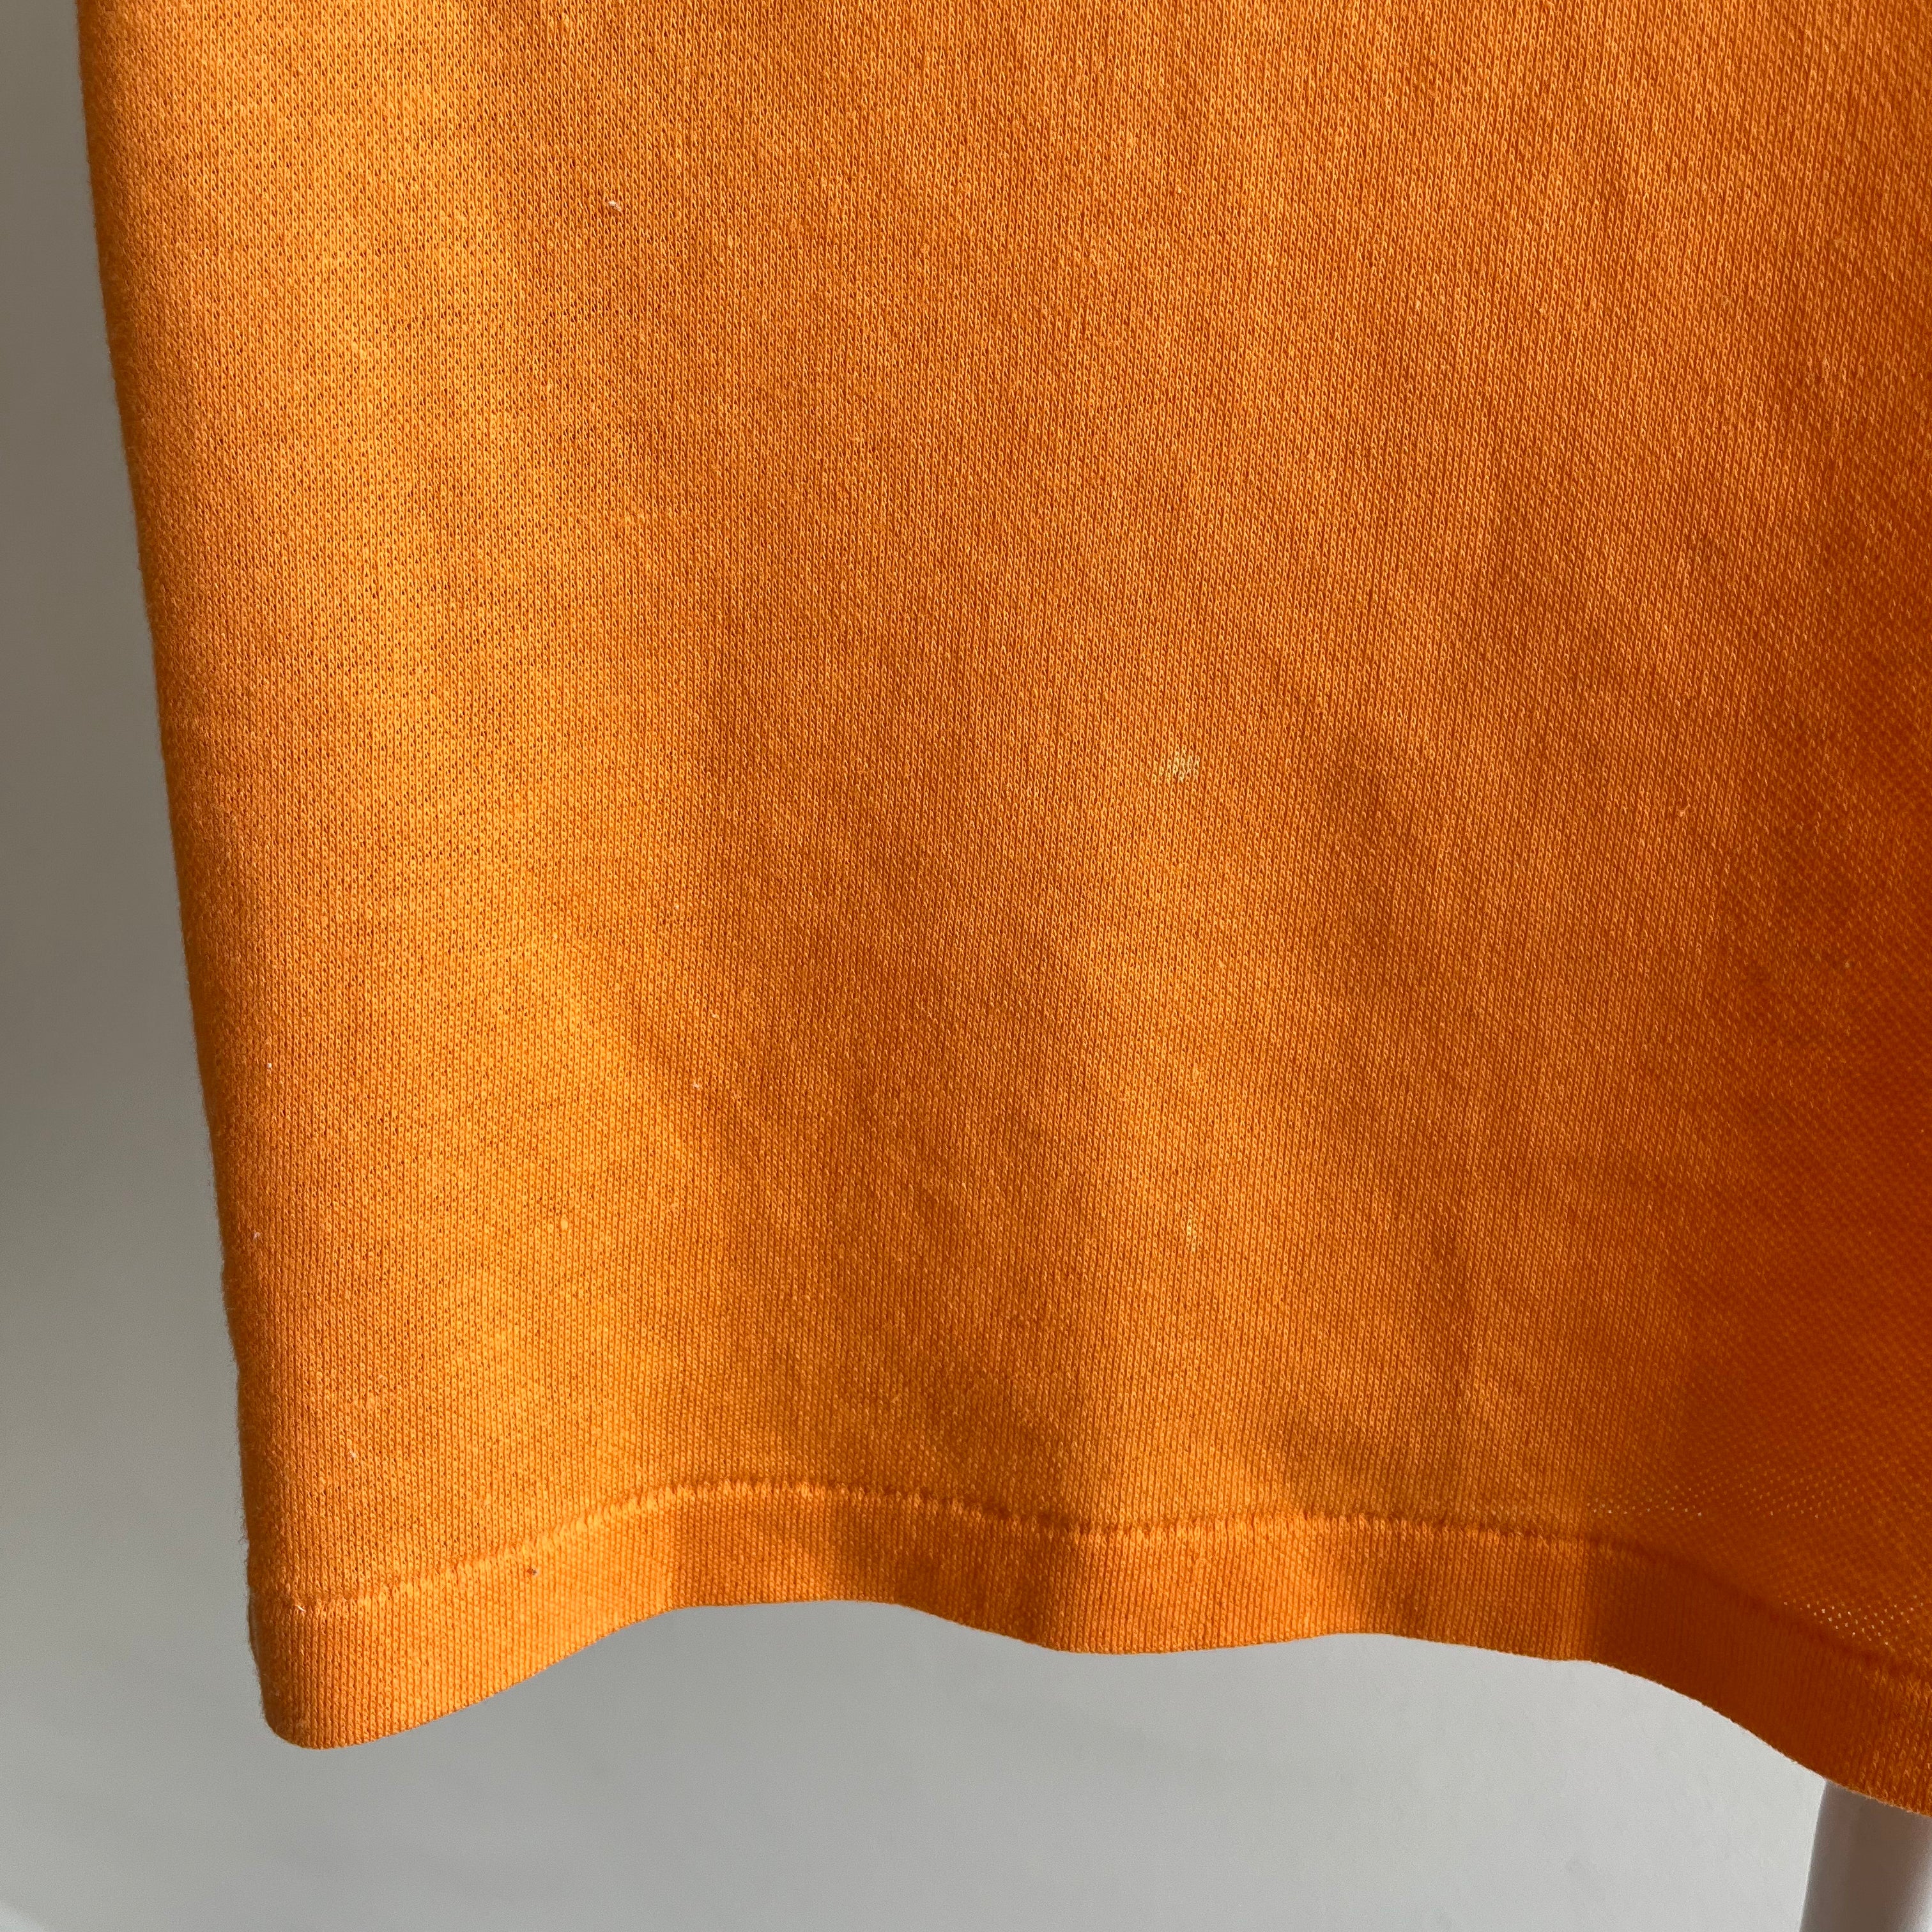 1970s Orange Sherbert Soft and Lightweight Polo T-Shirt